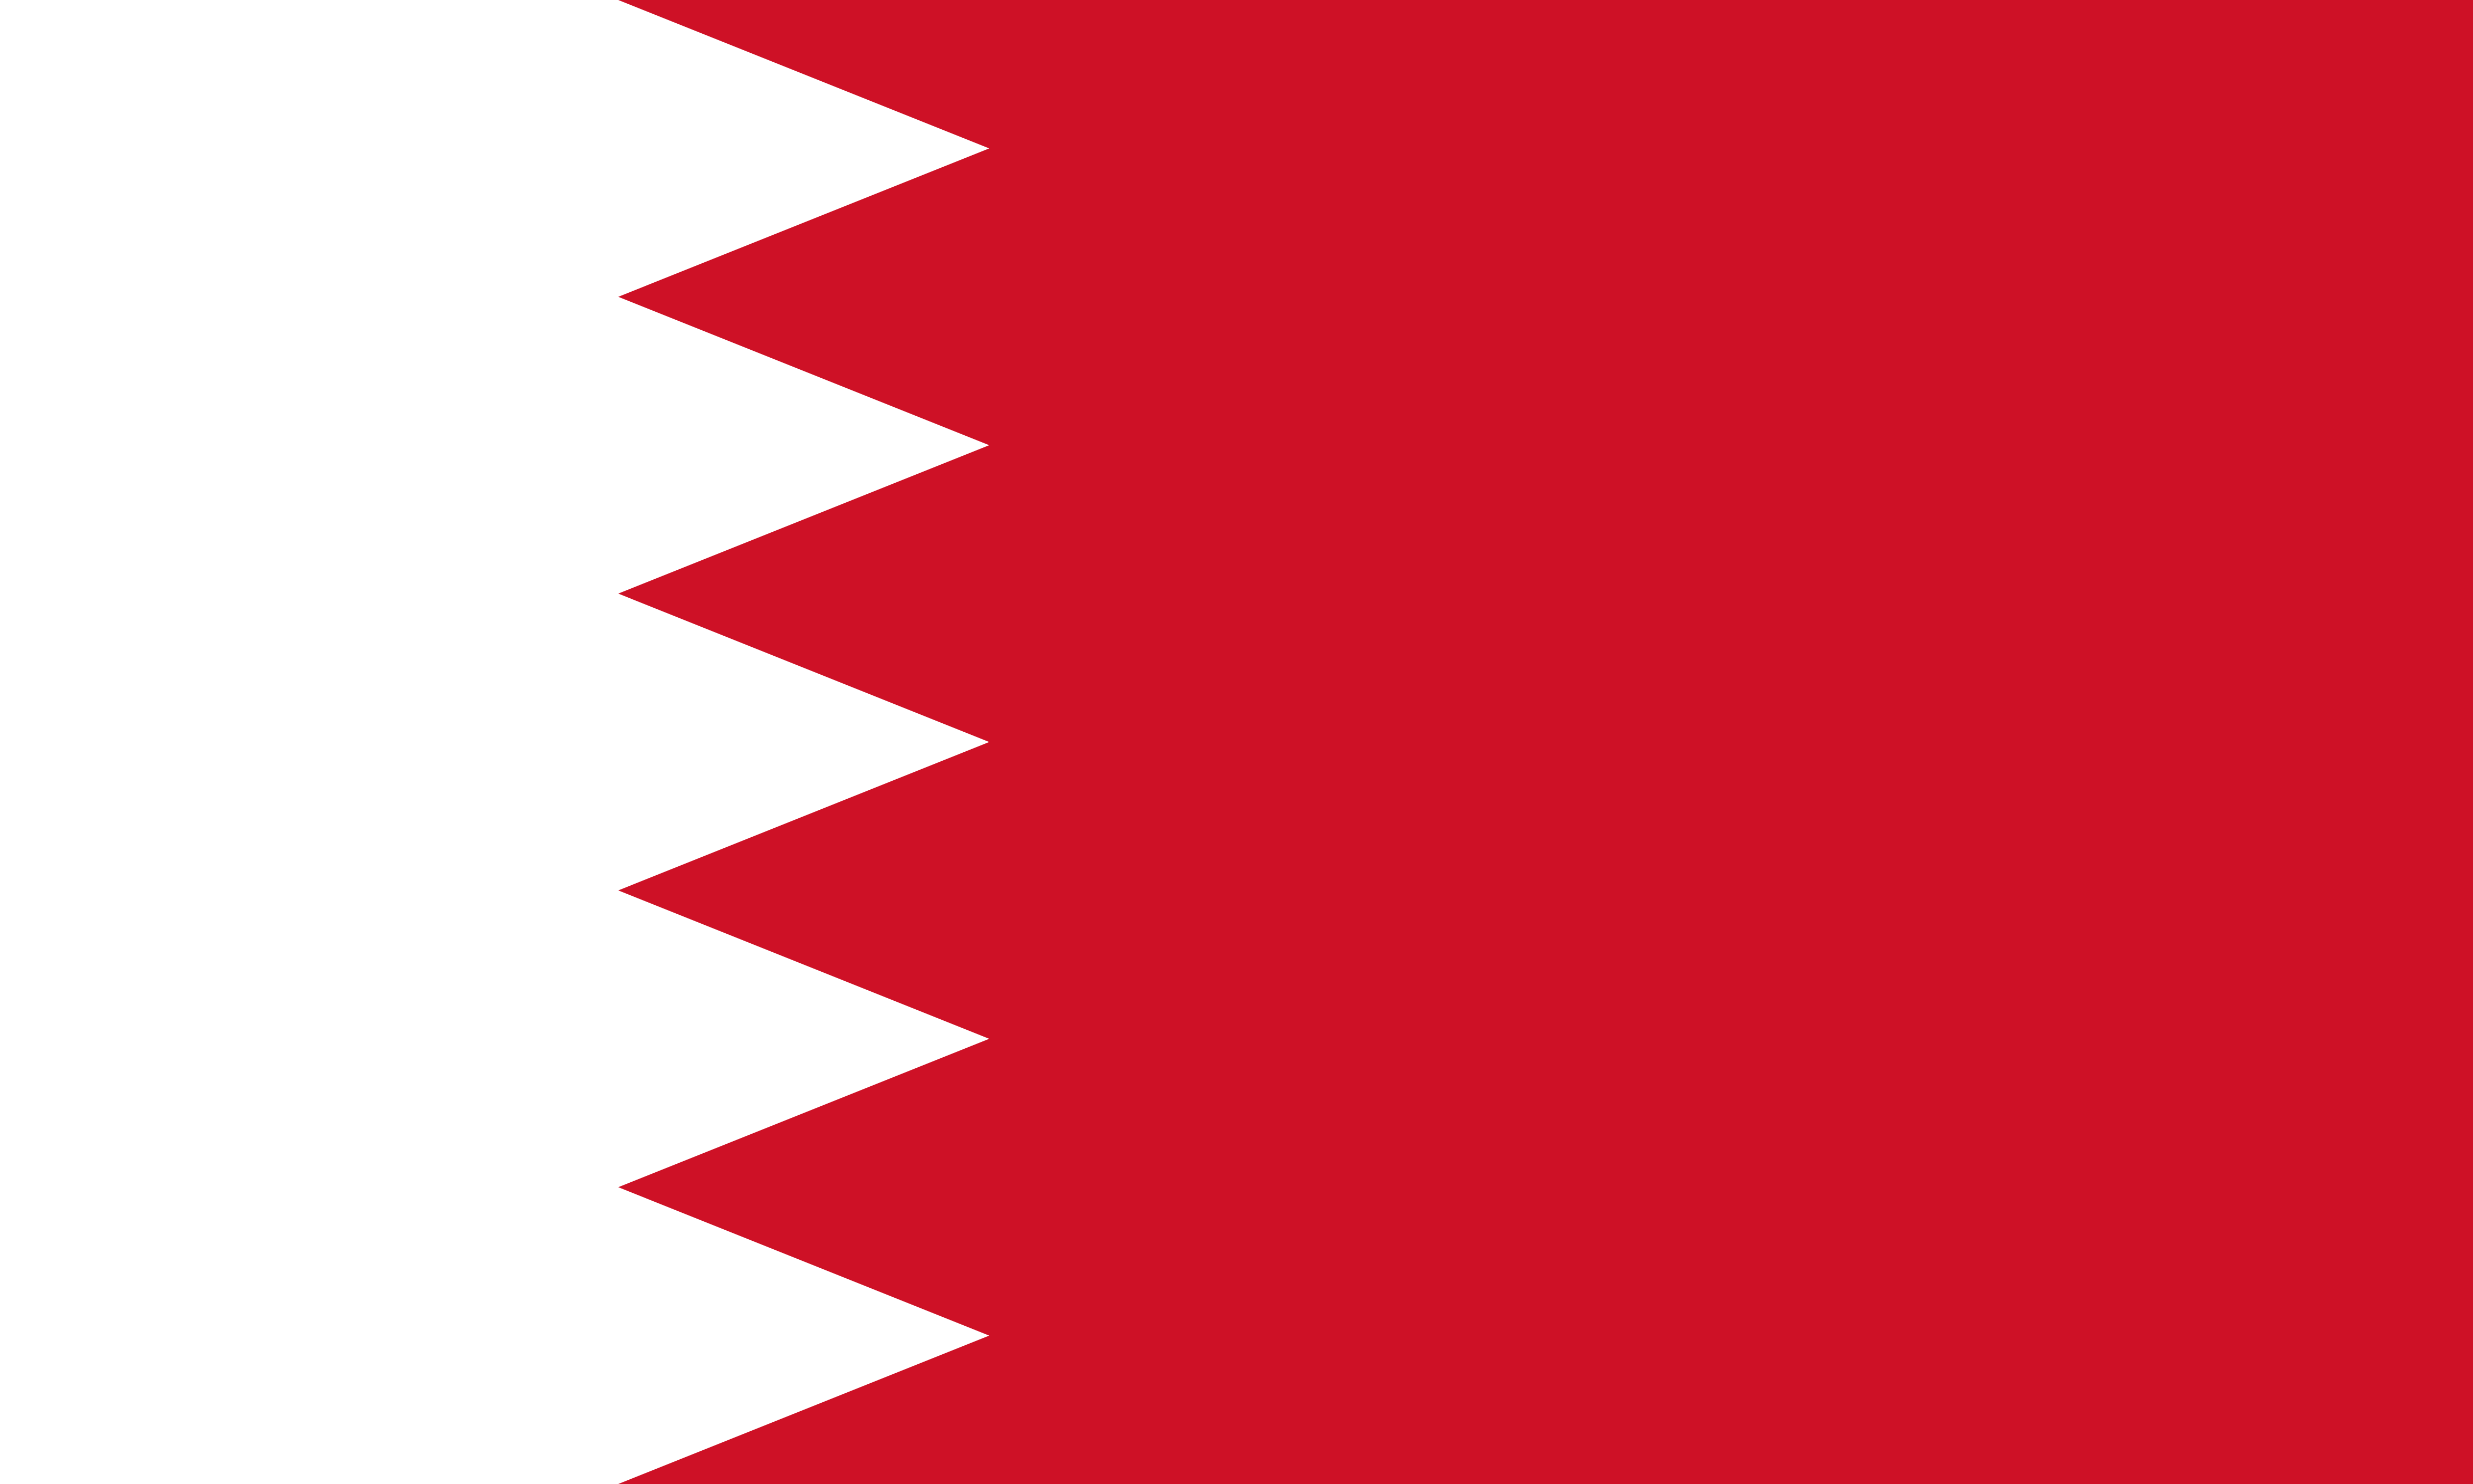 Bahrain Flag Image - Free Download